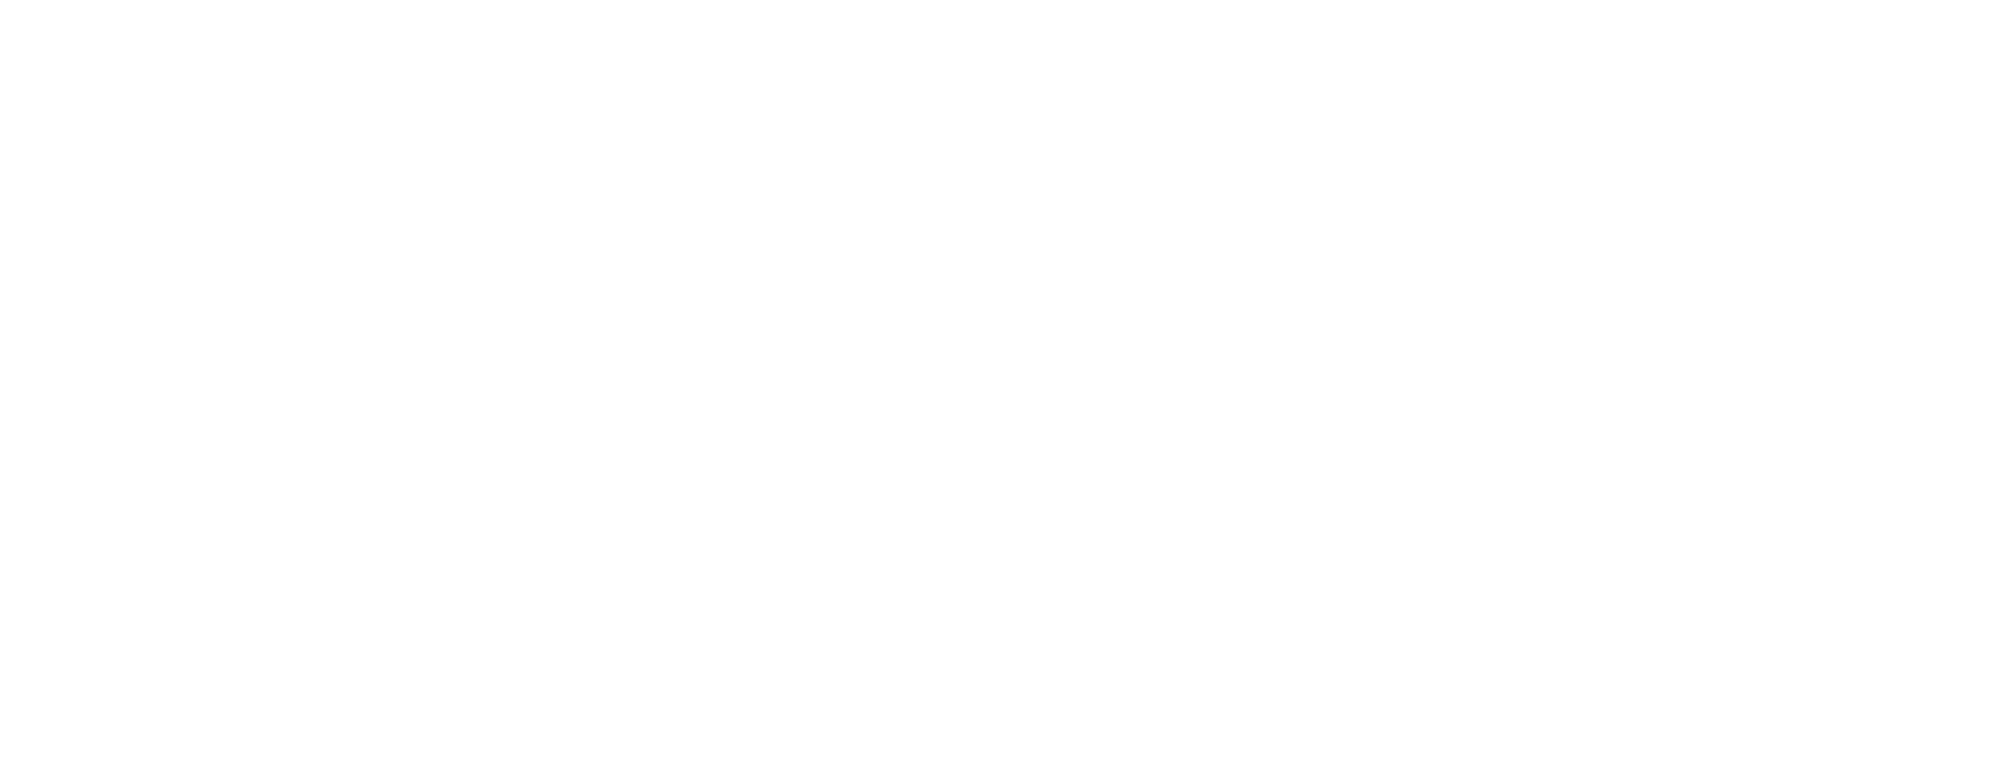 OpenFF Toolkit 0.15.2+0.g97af593.dirty documentation logo